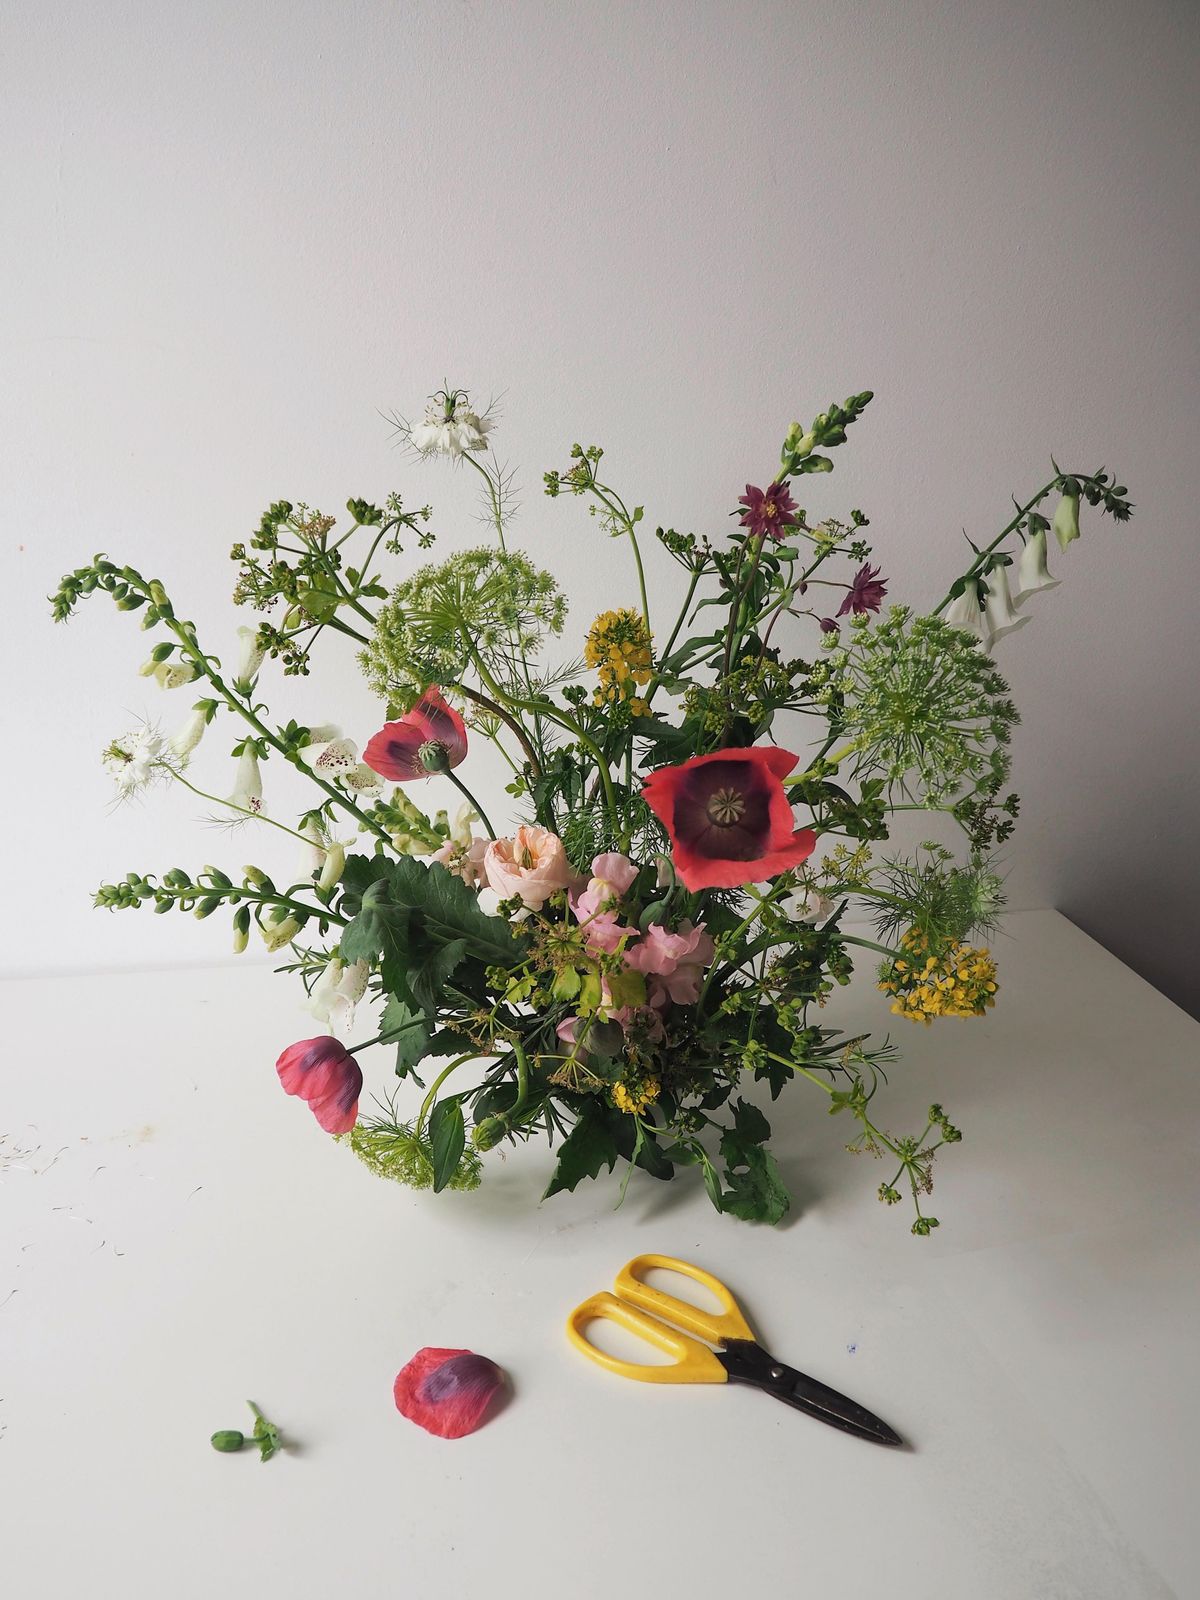 Garden inspired floristry at Form Lifestyle Store- summer vase arrangement